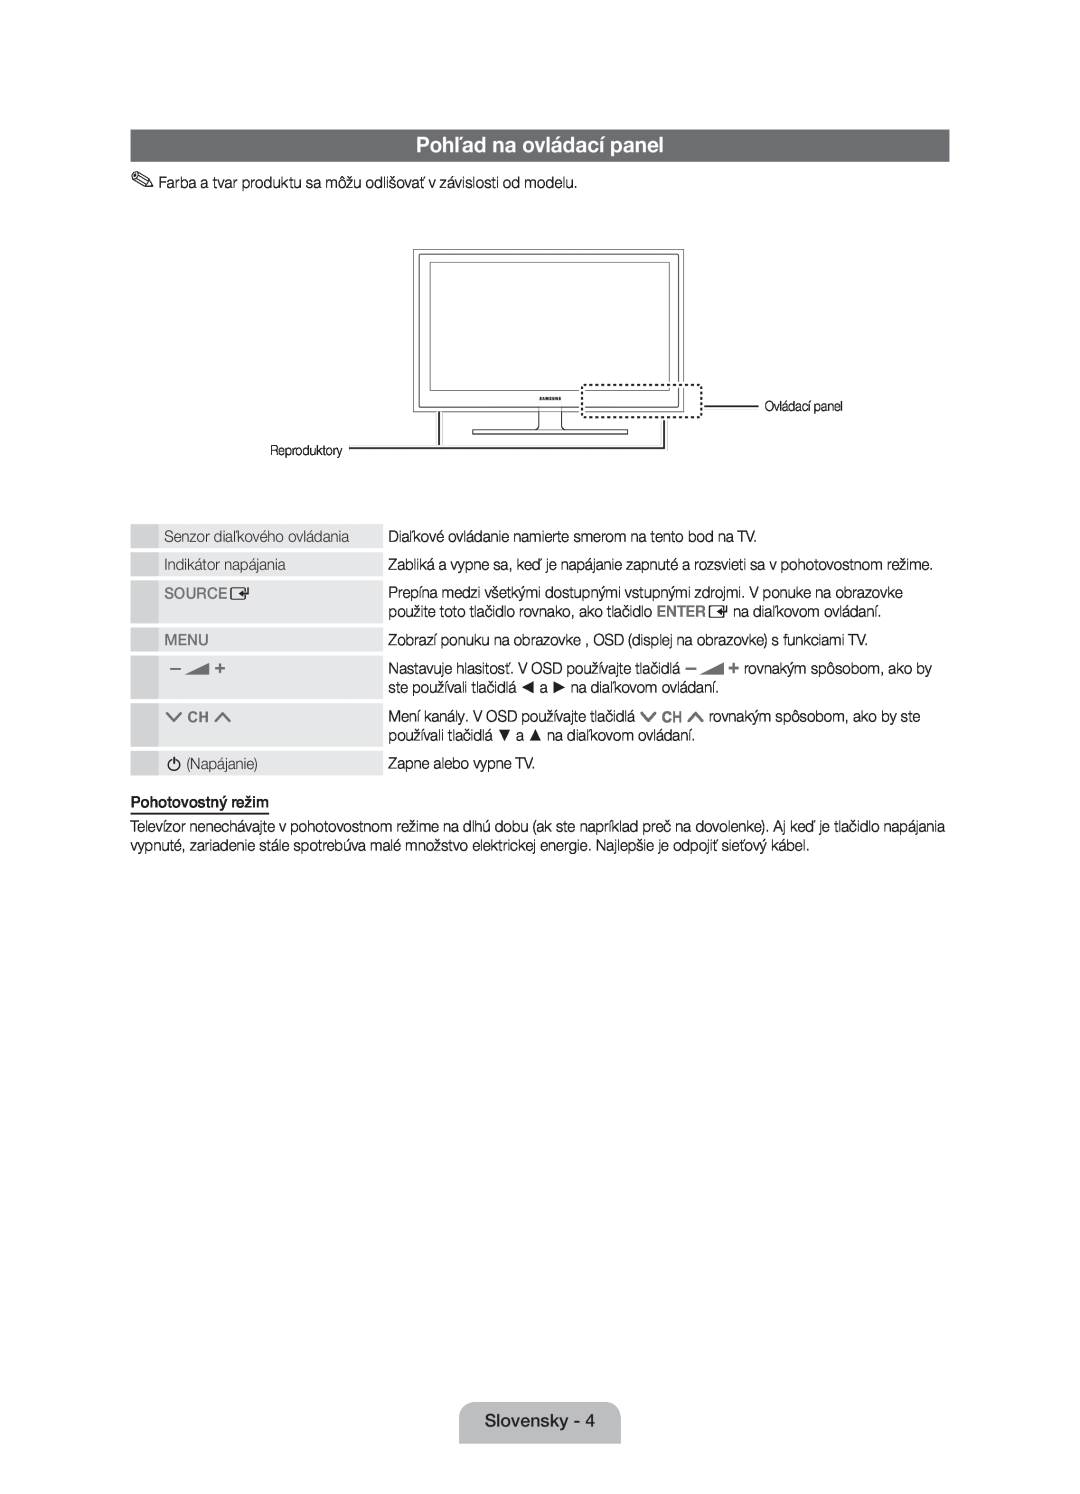 Samsung UE46D5000PWXXH, UE32D5000PWXZG, UE40D5000PWXZT, UE40D5000PWXZG manual Pohľad na ovládací panel, Source E, Menu 